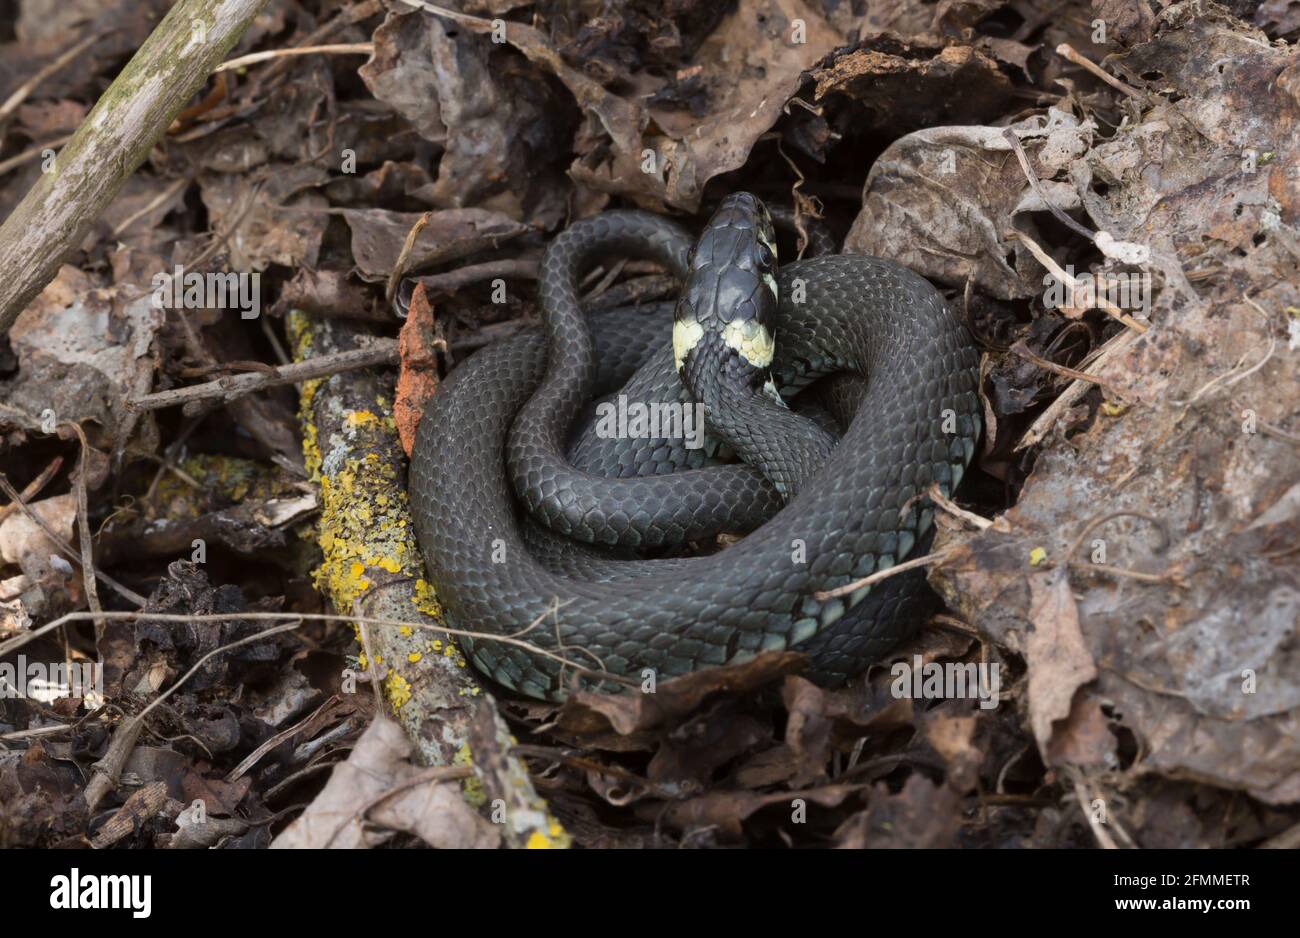 Grass snake, Natrix natrix Stock Photo